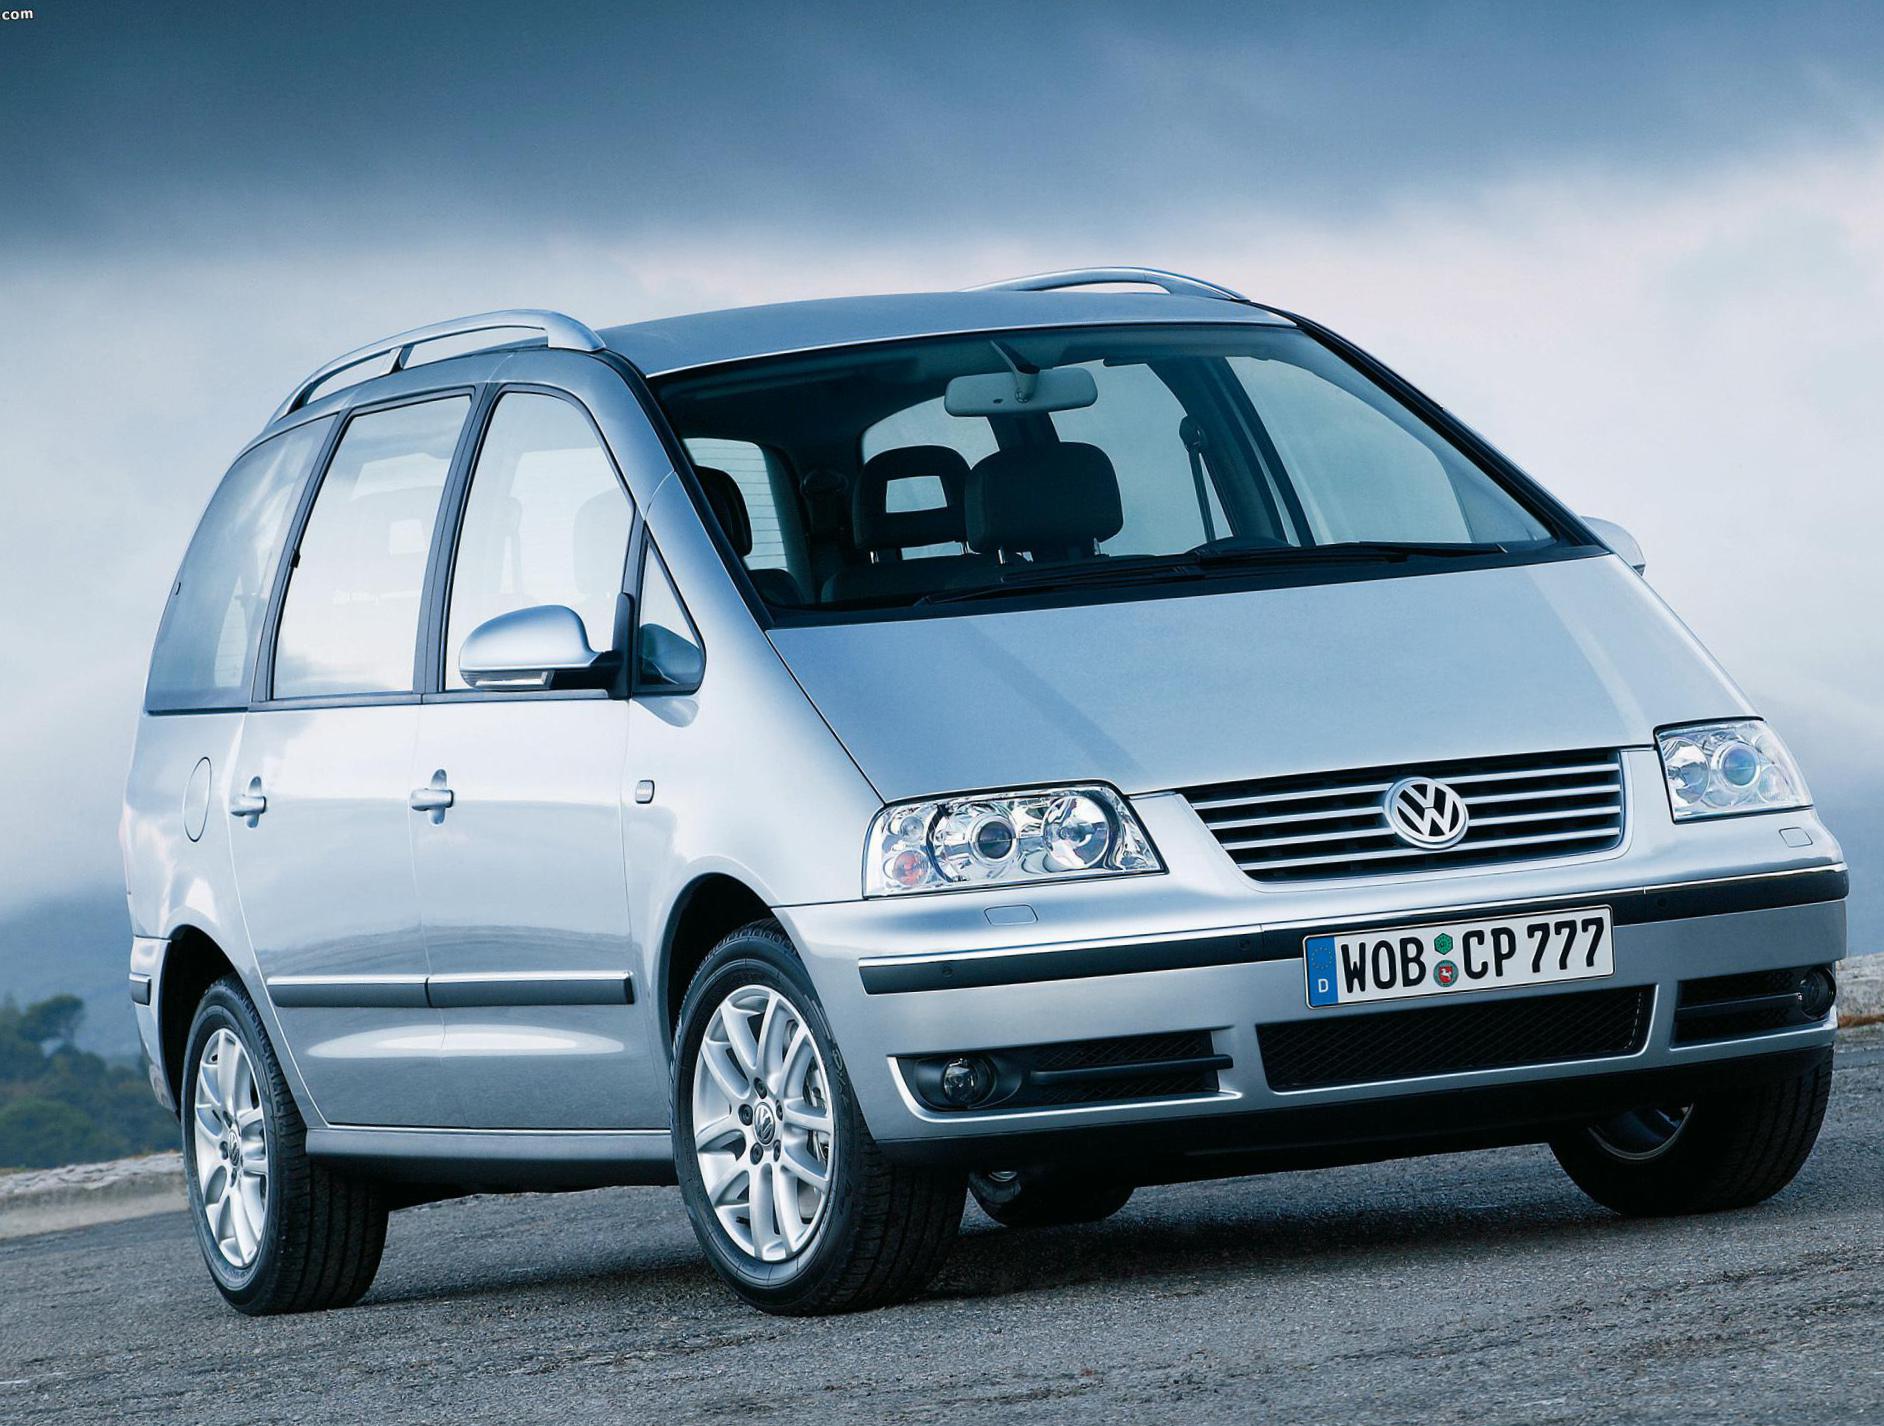 Sharan Volkswagen prices 2015